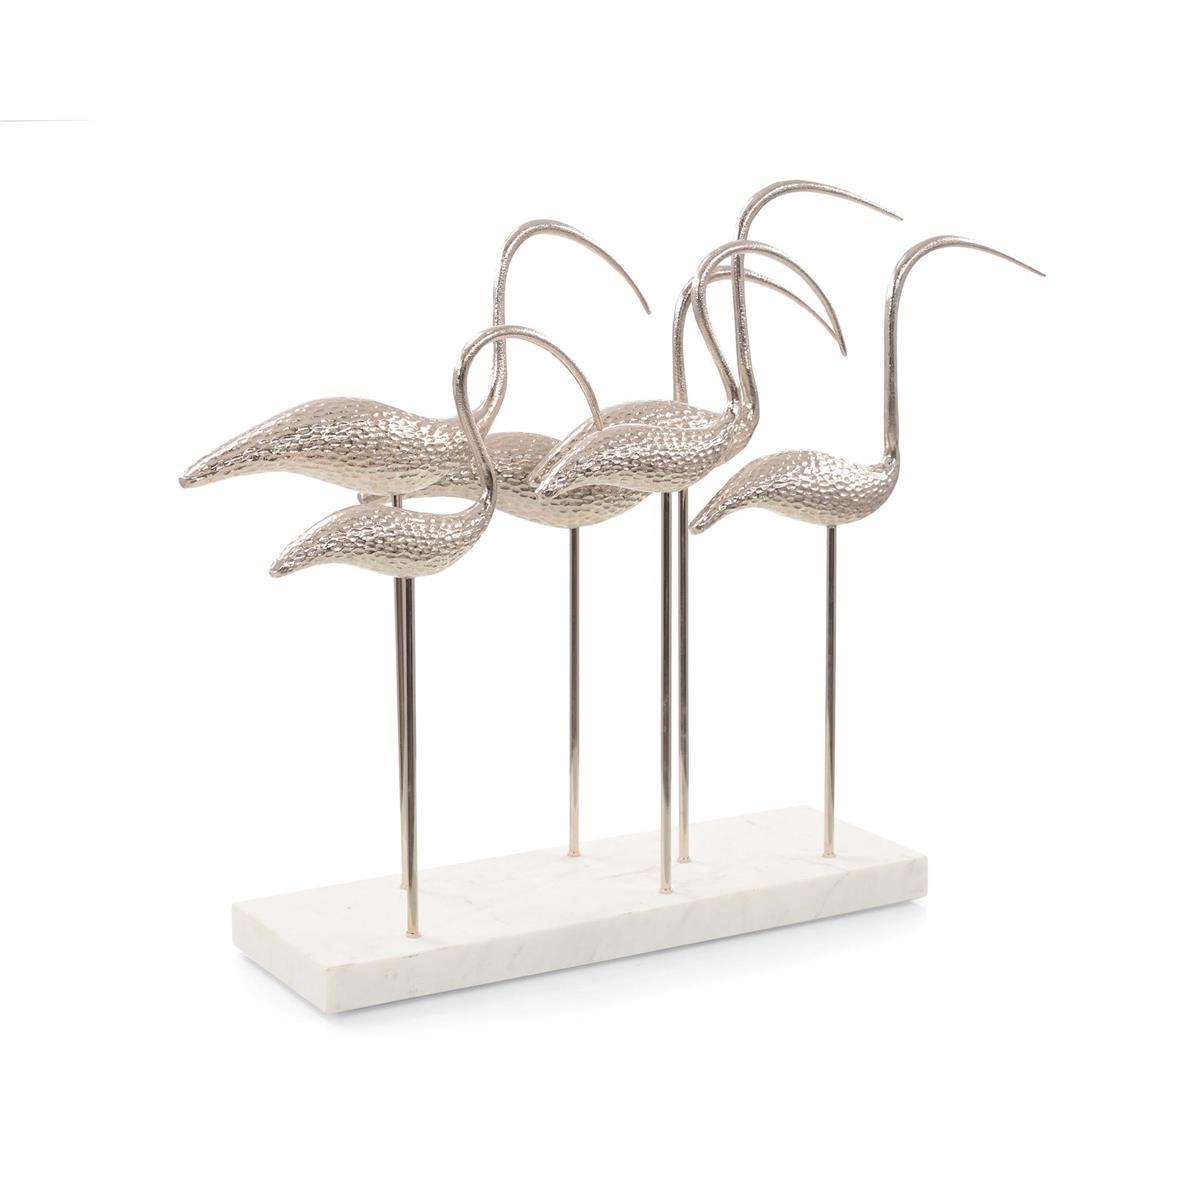 Crane Sculpture-John Richard-Sculptures & Objects-Artistic Elements